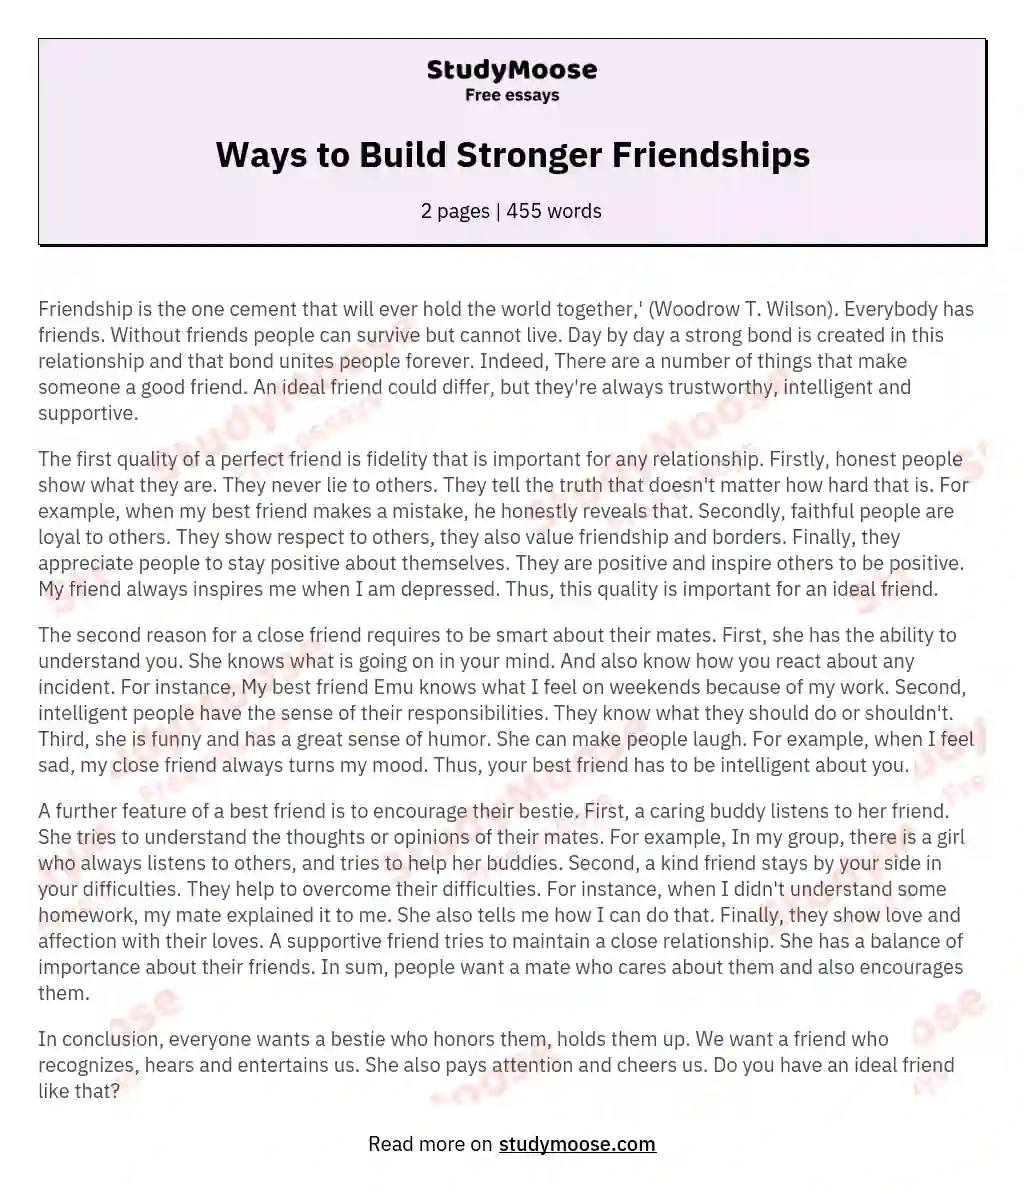 Ways to Build Stronger Friendships essay